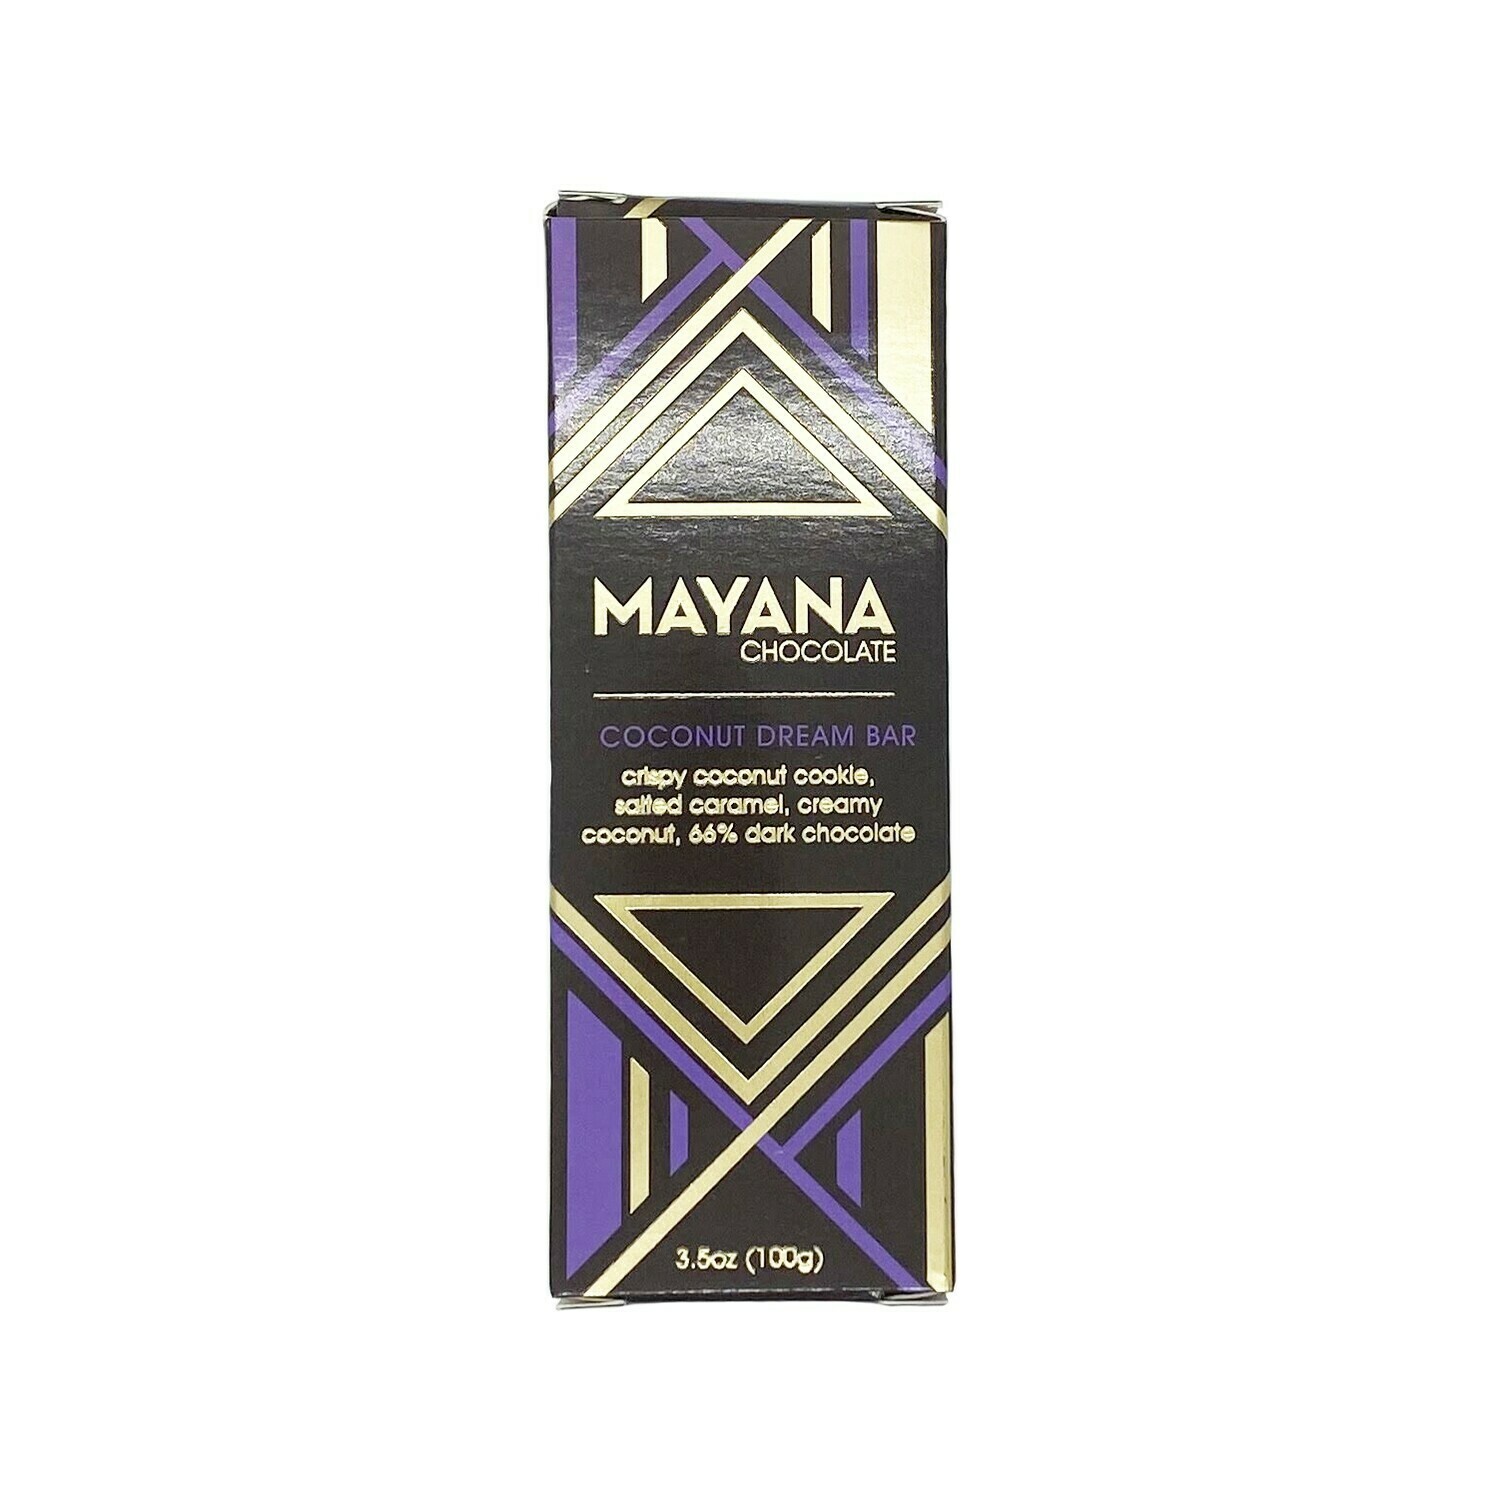 Mayana Chocolate Coconut Dream Bar Chocolate 3.5oz